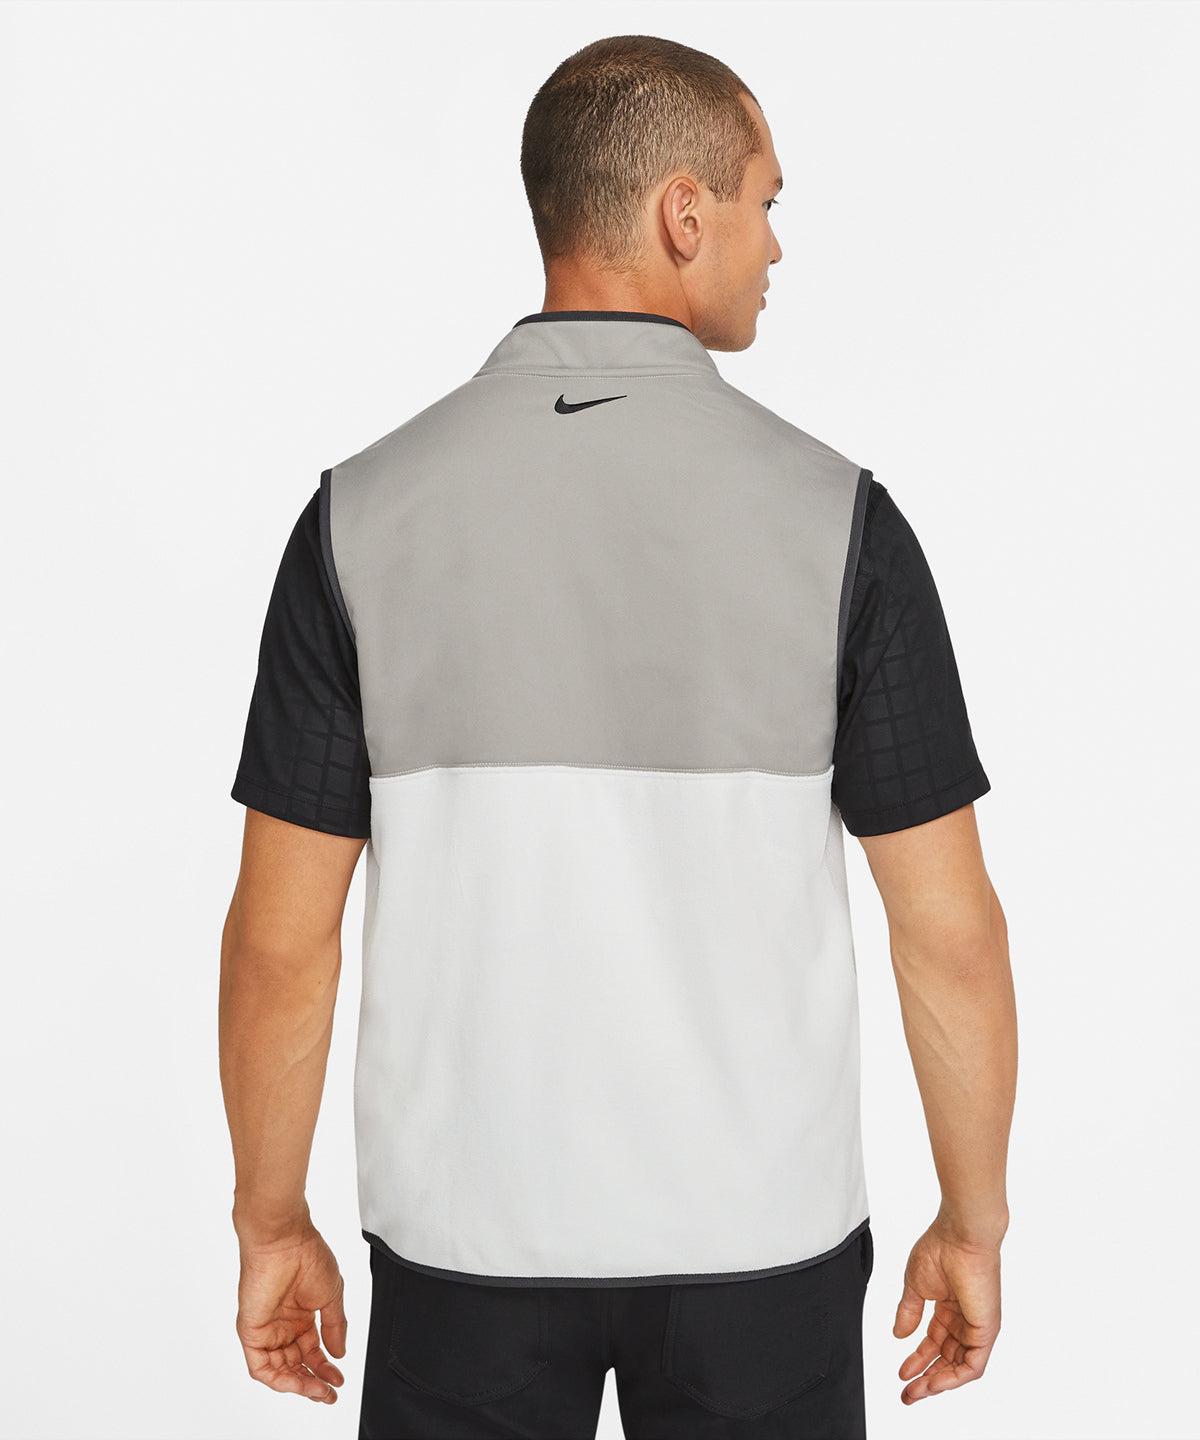 Nike Victory vest